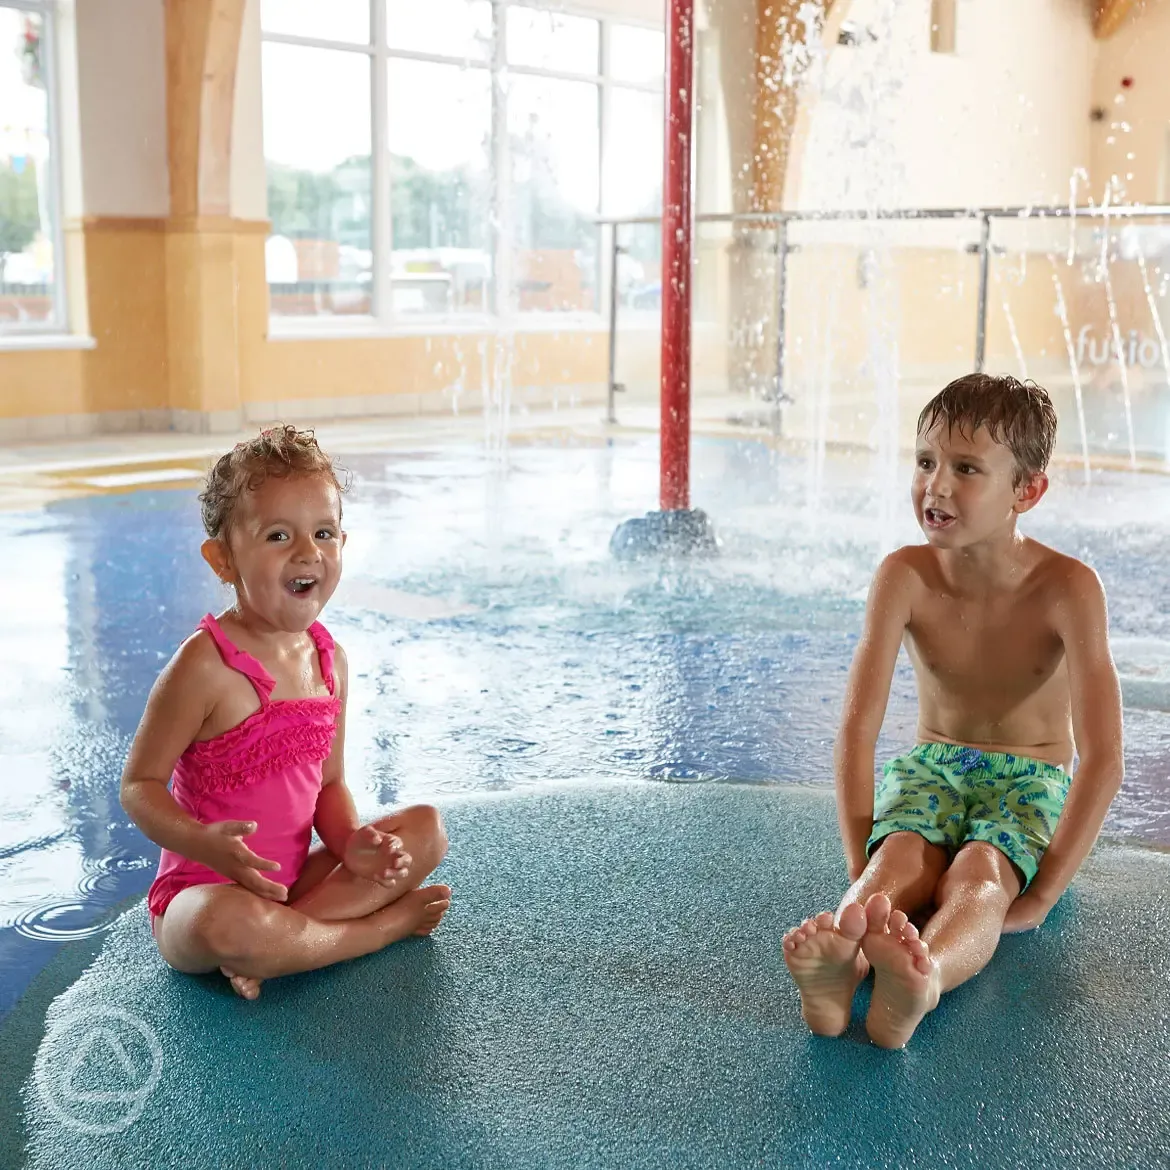  Fusion leisure centre indoor swimming pool